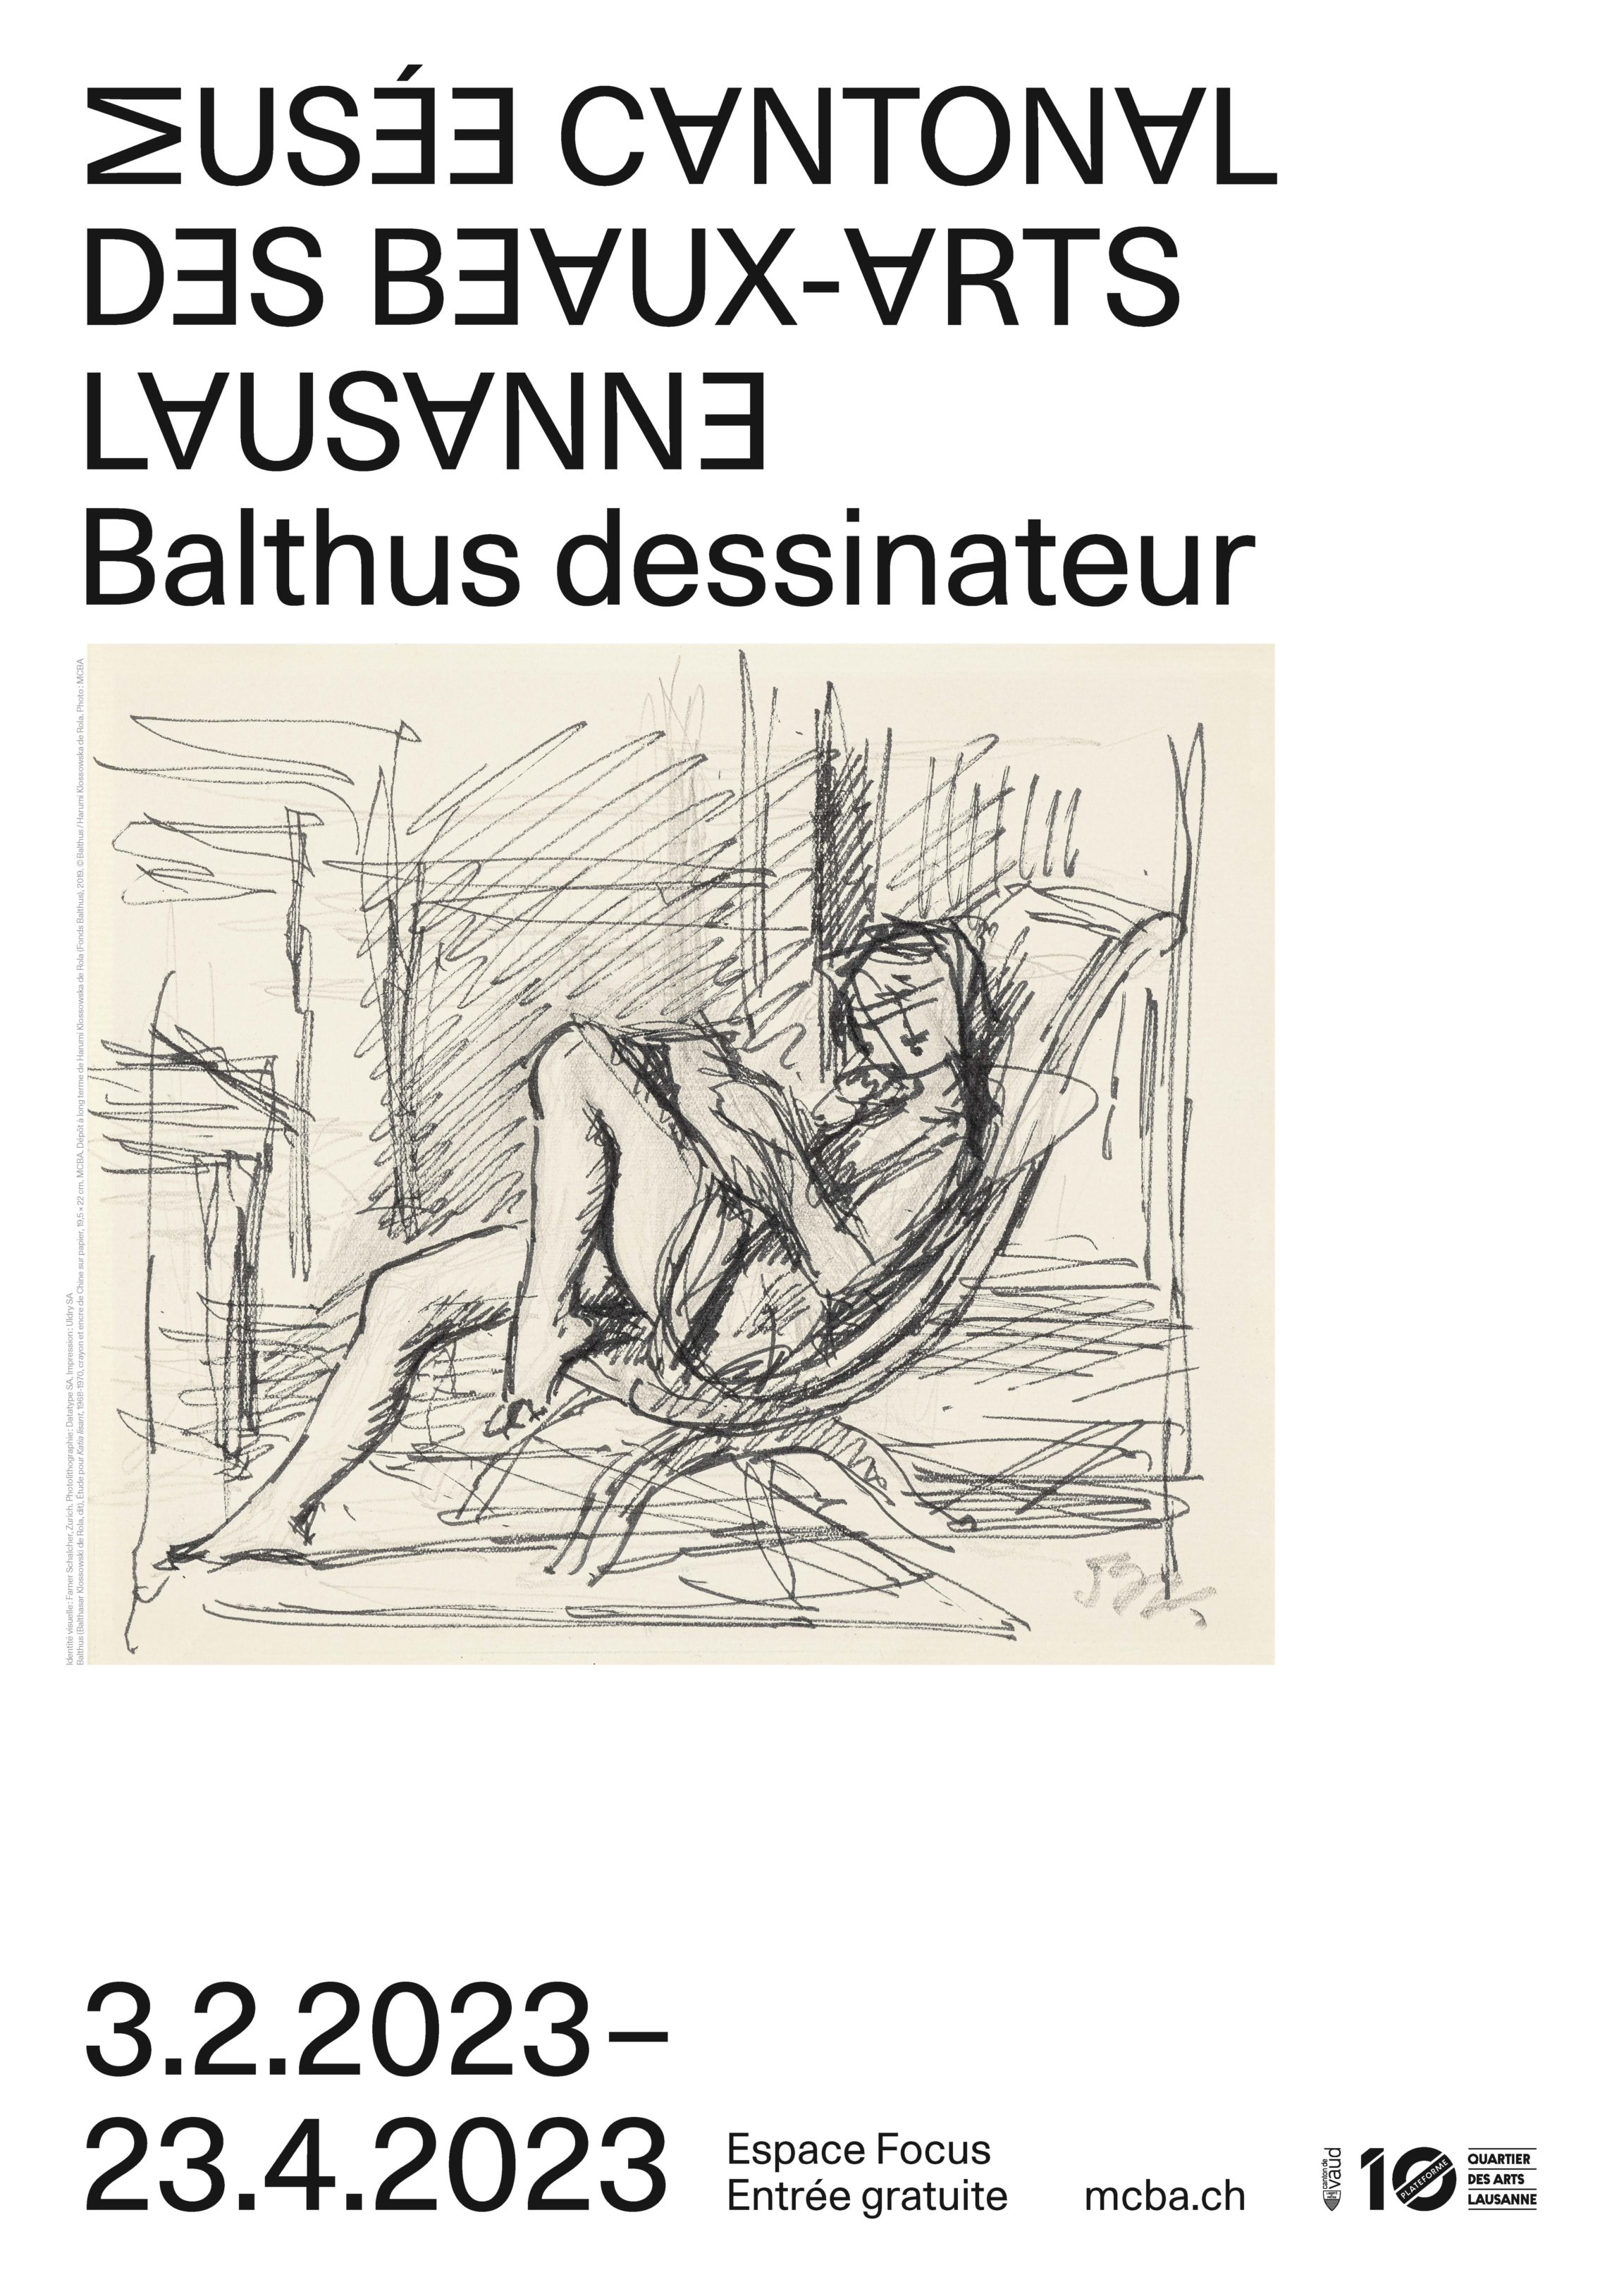 Balthus the Draftsman